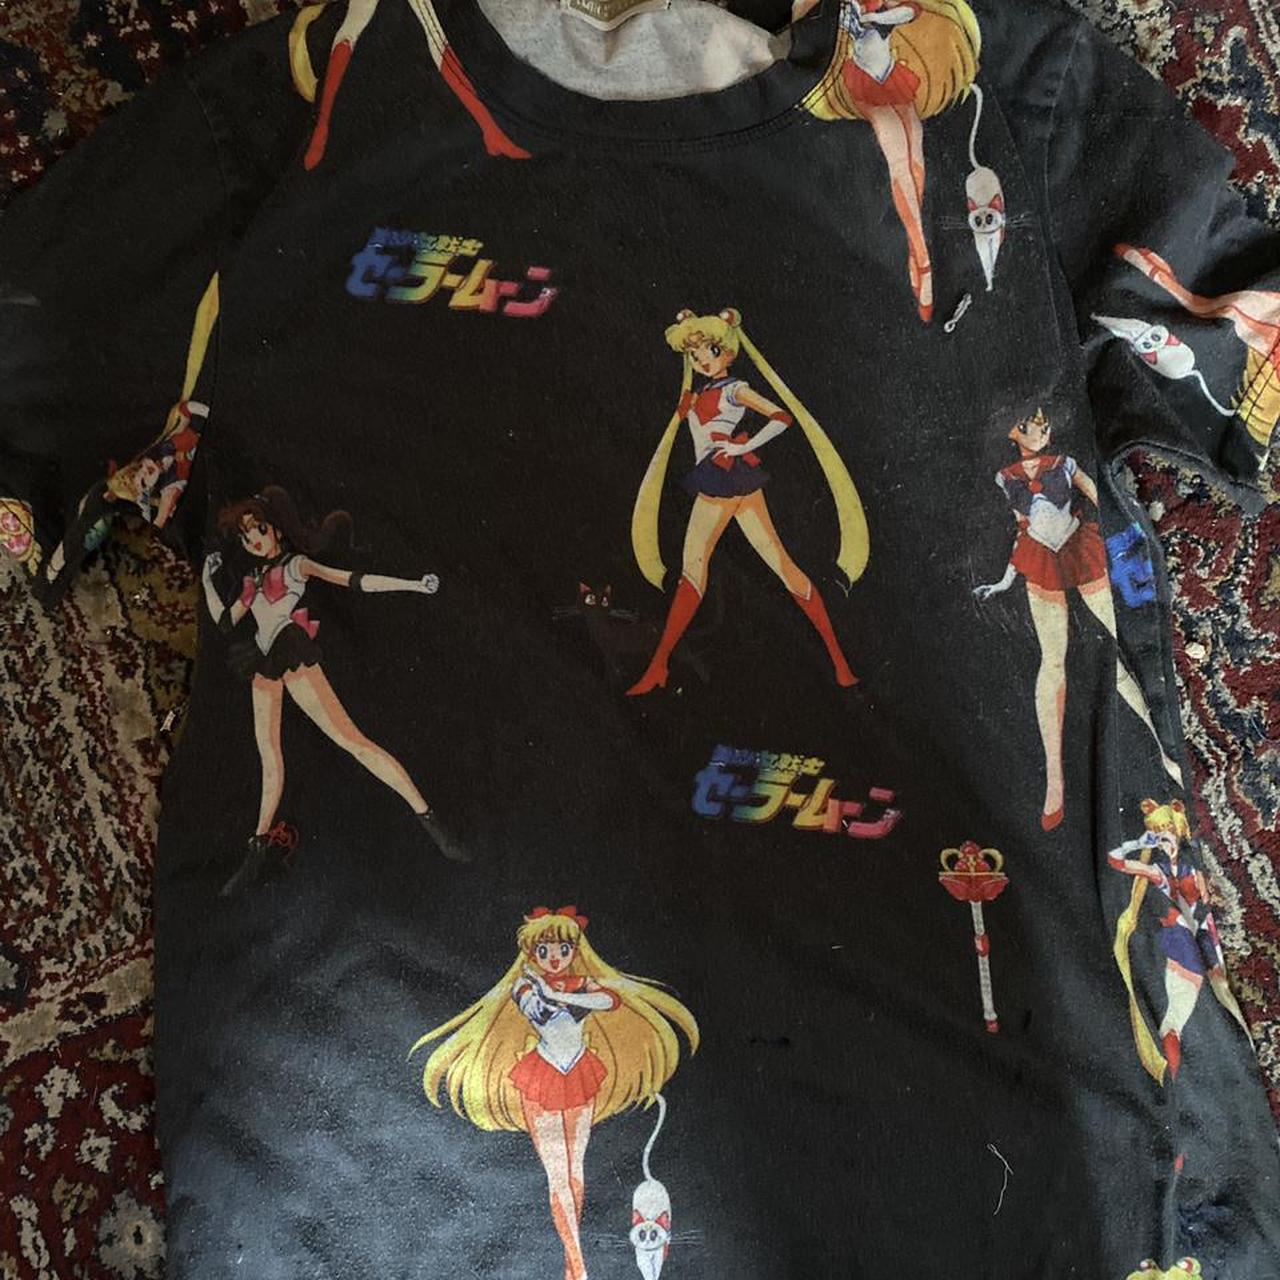 Product Image 2 - Sailor Moon t-shirt. Bought at